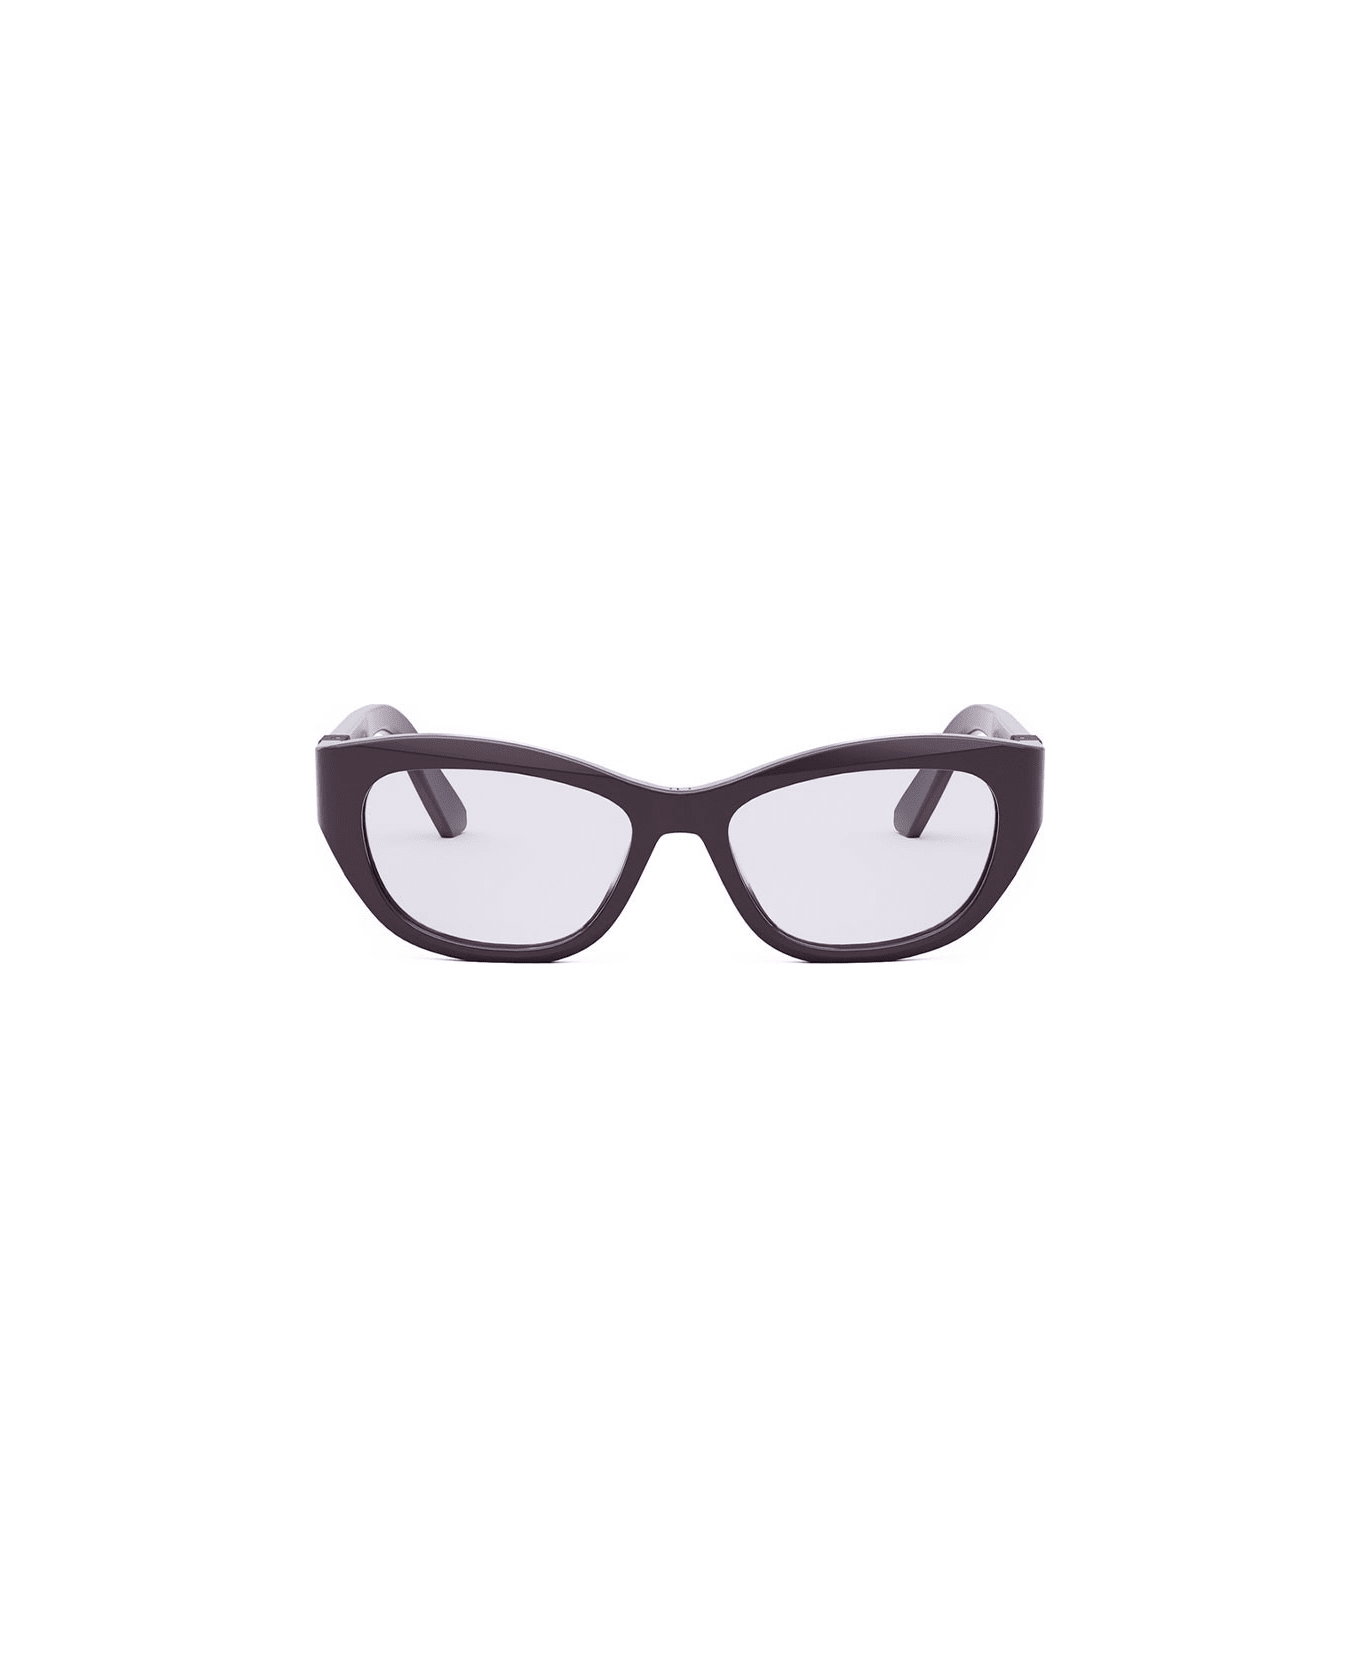 Dior Eyewear Glasses - Viola